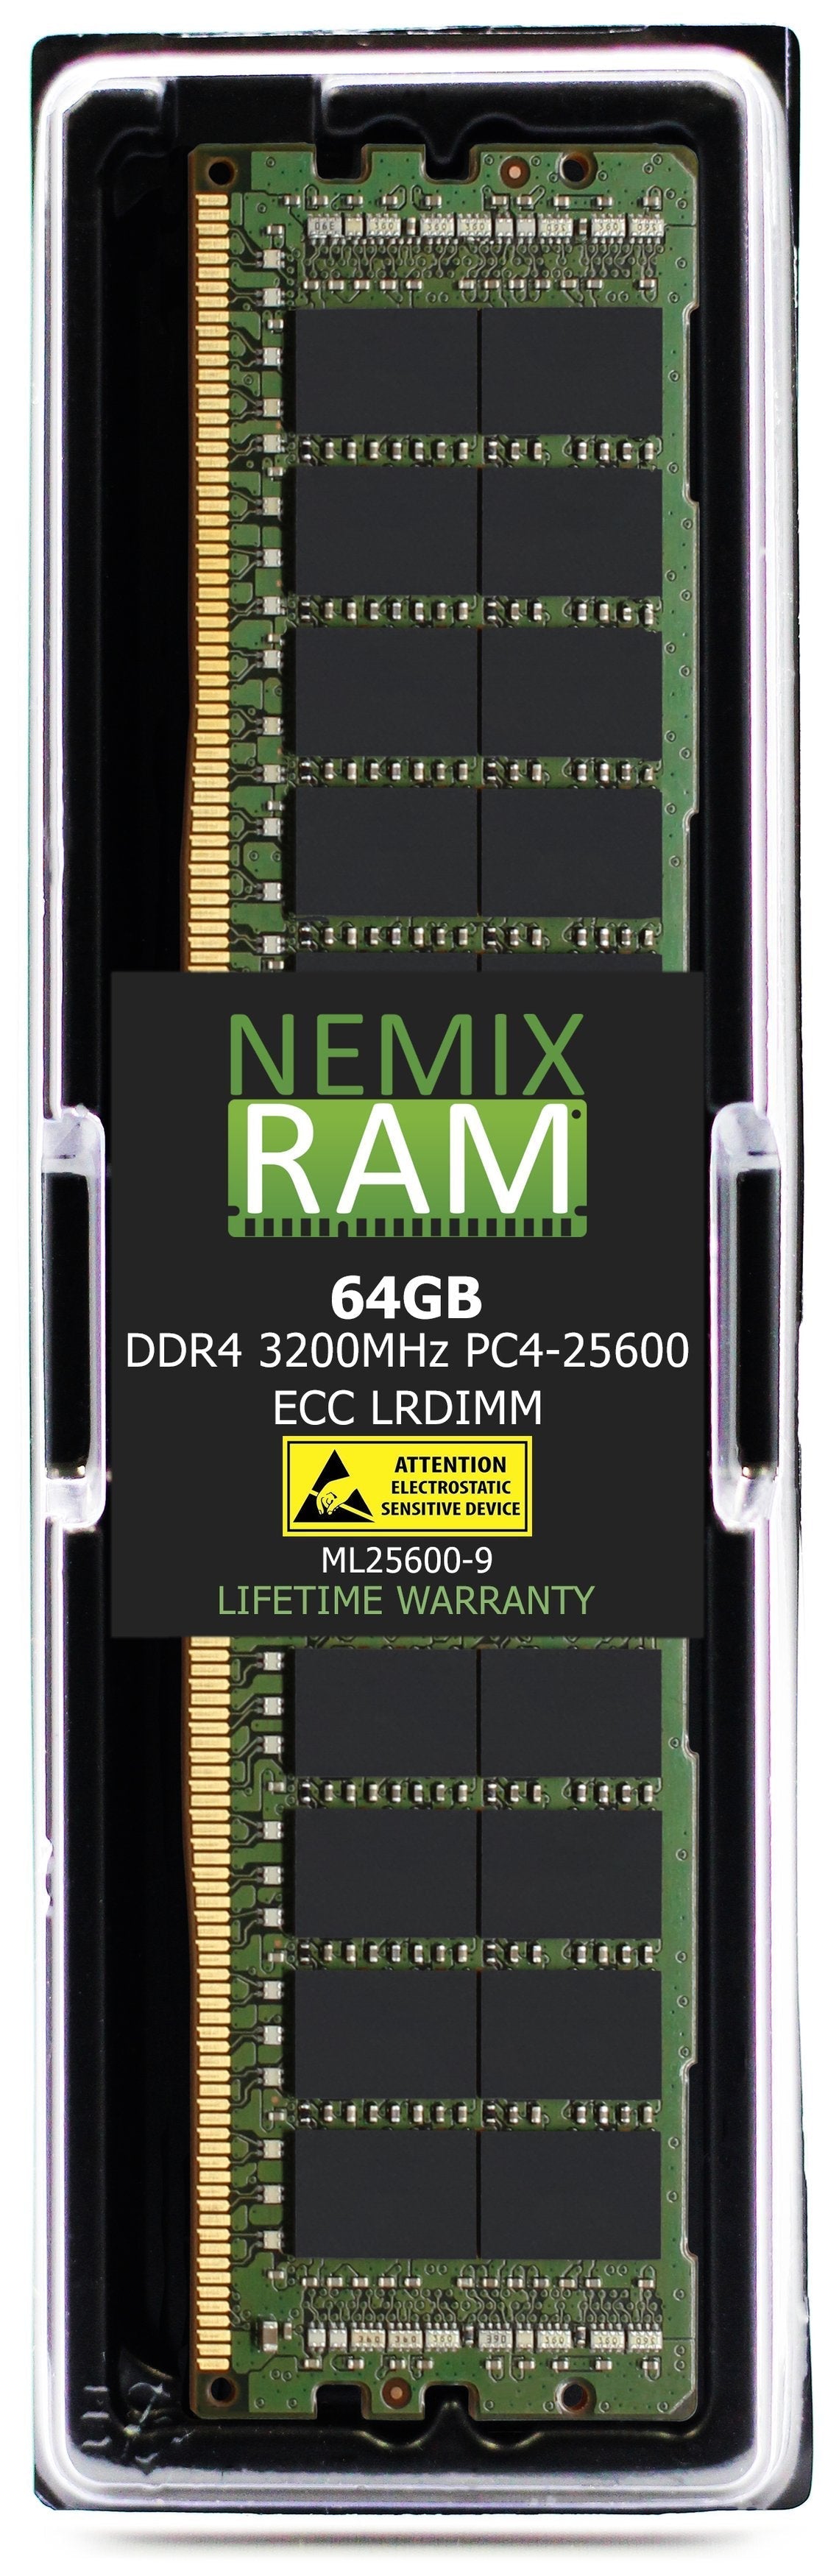 DDR4 3200MHZ PC4-25600 LRDIMM 4RX4